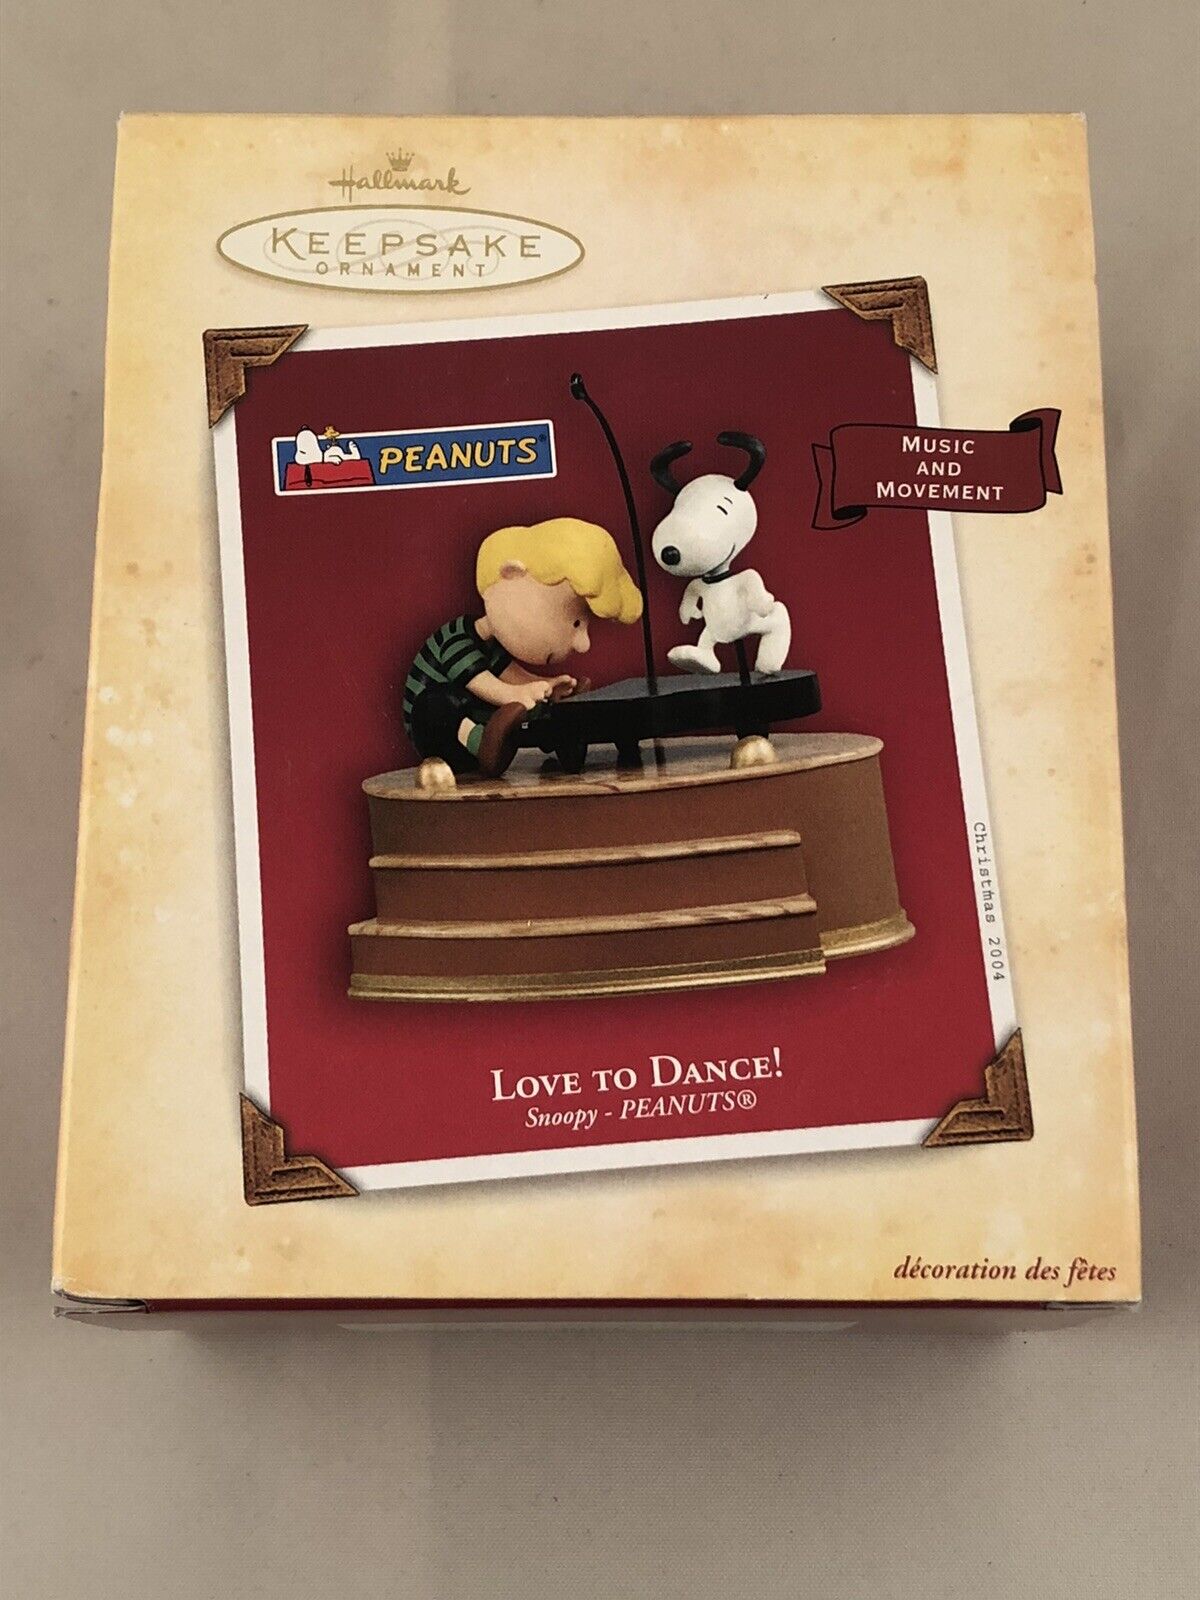 2004 Hallmark Keepsake Ornament Peanuts Love to Dance Linus and Snoopy New